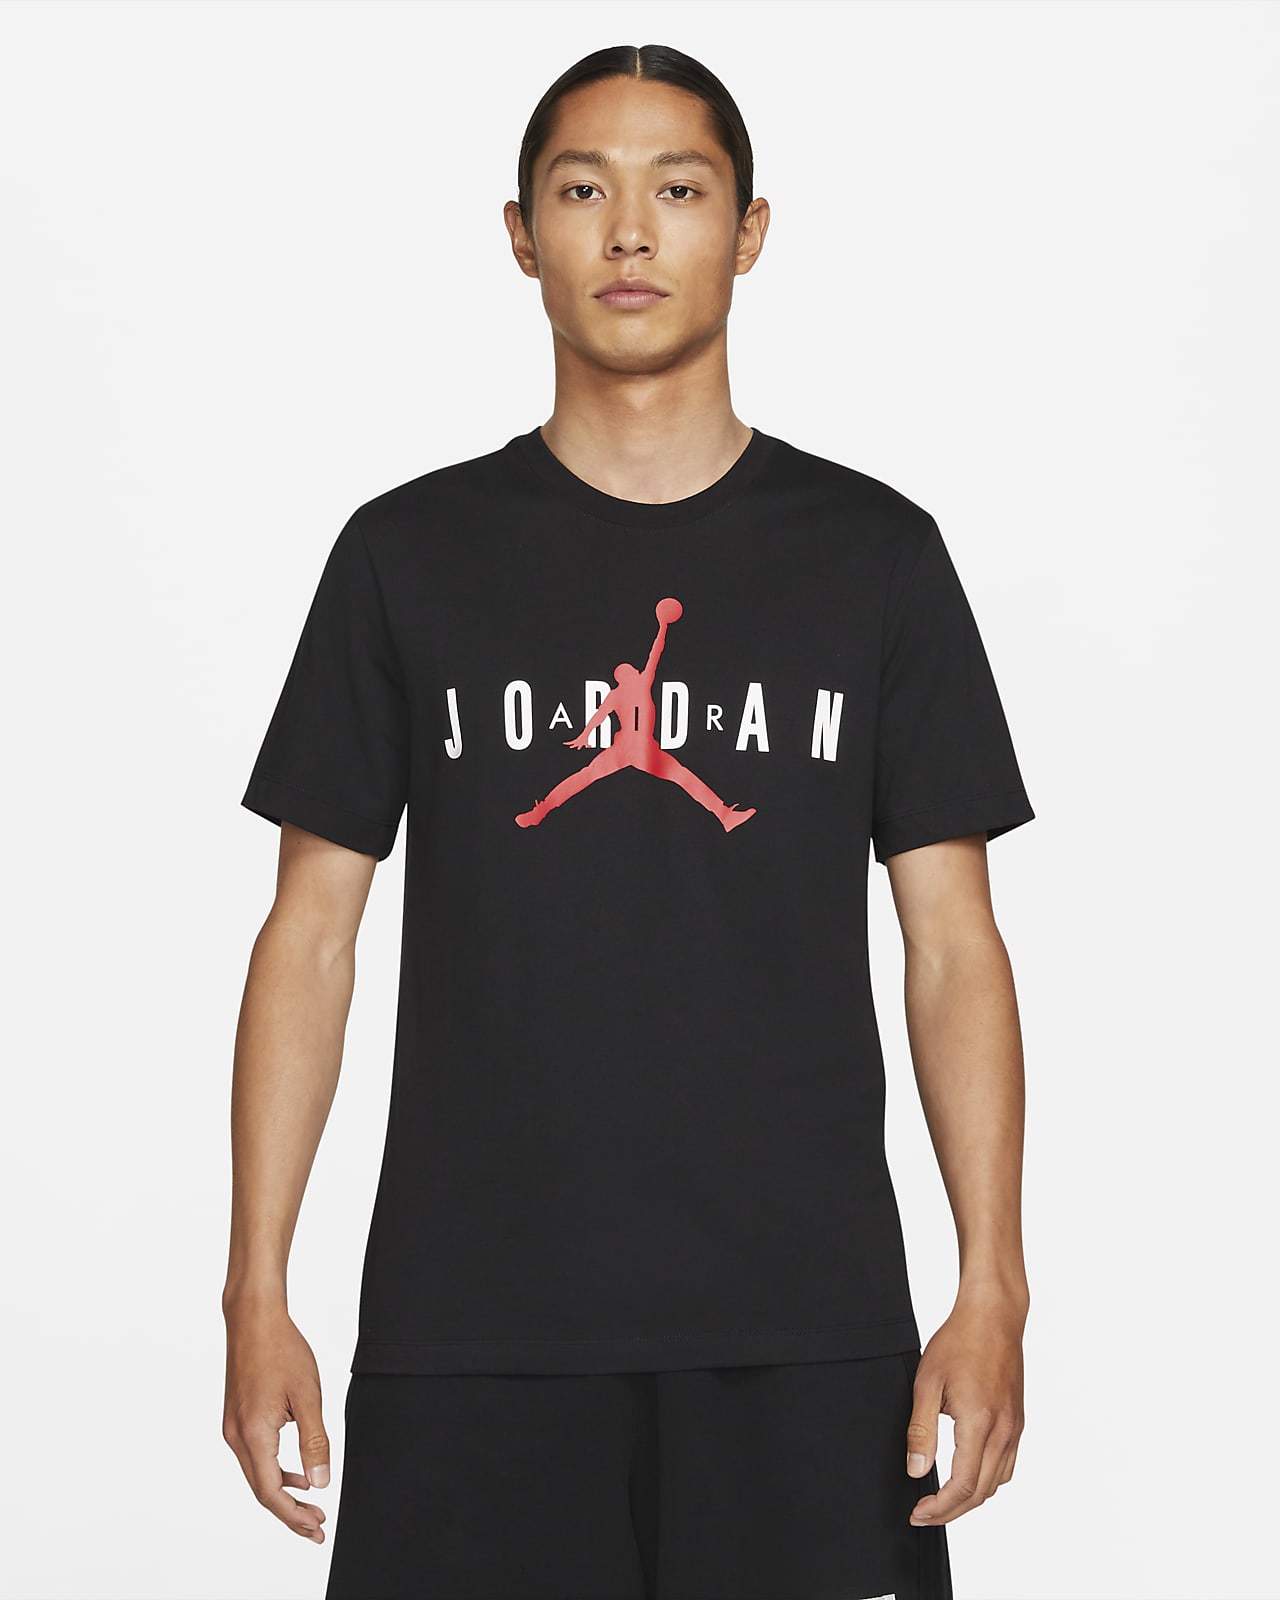 Ilegible Propio Petrificar Jordan Air Wordmark Camiseta - Hombre. Nike ES